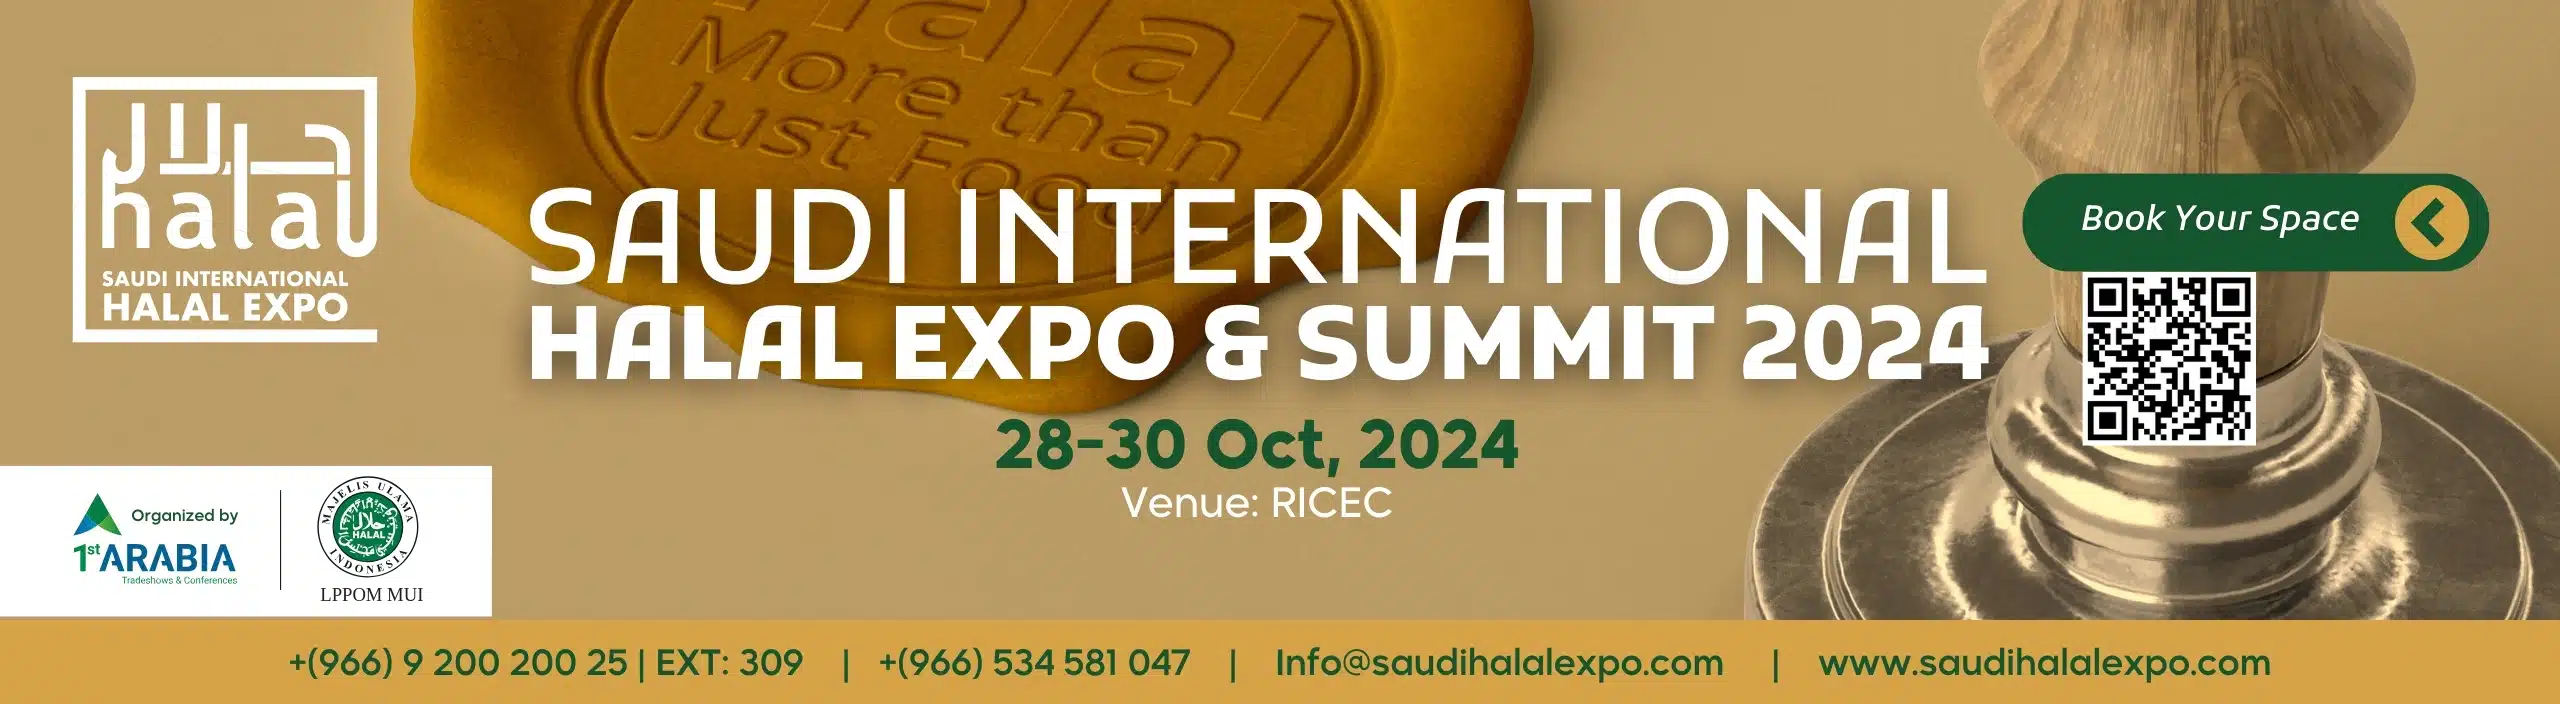 Saudi-Halal-Expo-2024